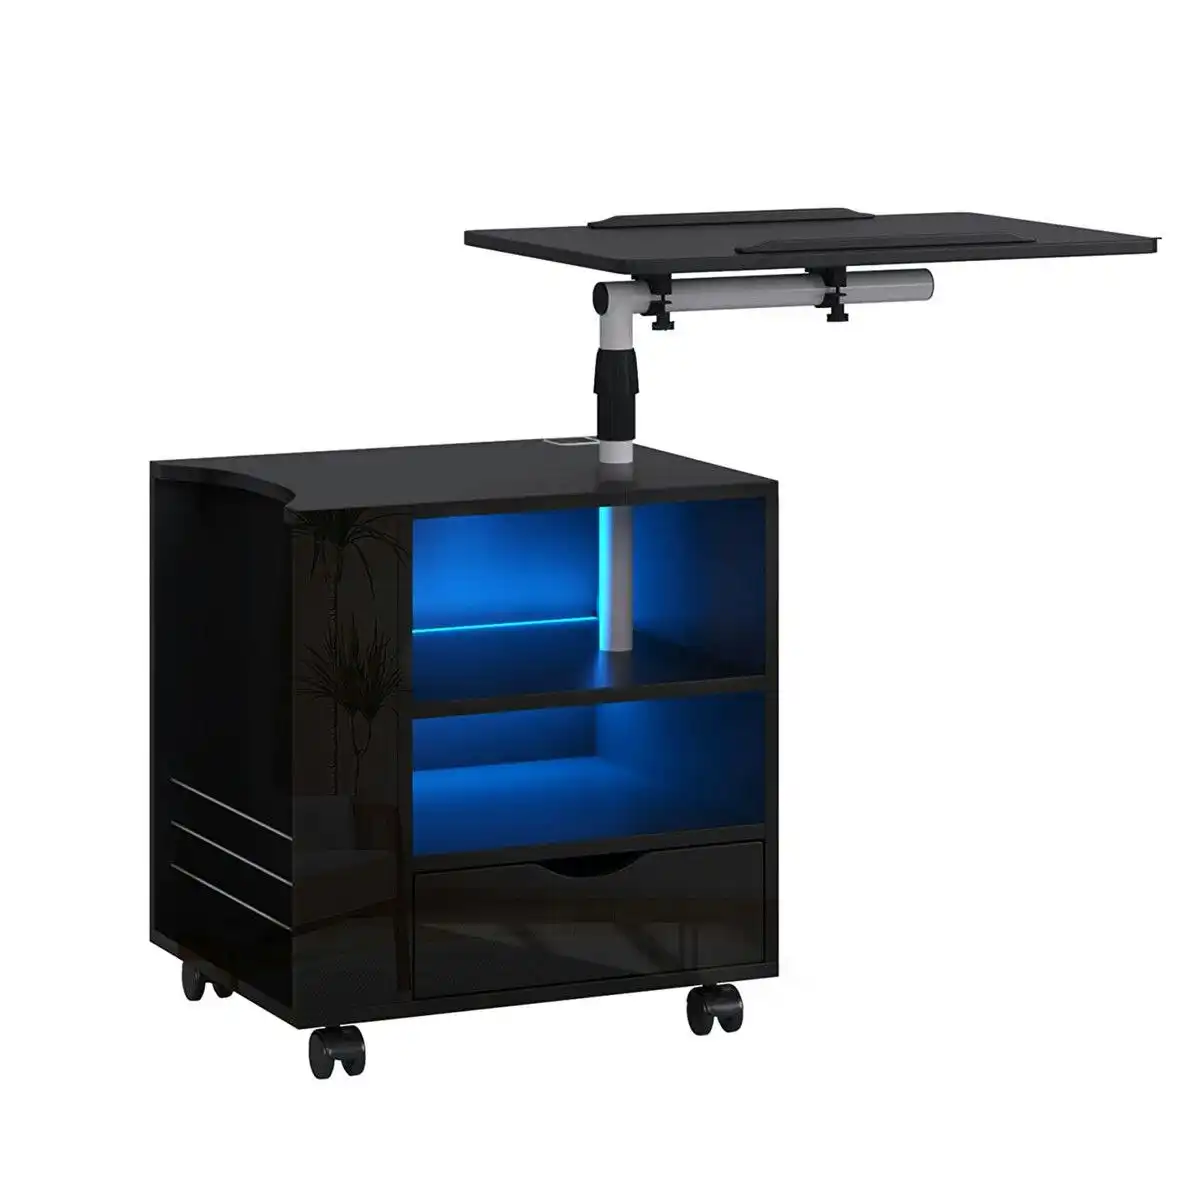 Ausway Black Bedside Table Bedroom Furniture Nightstand Modern Storage Cabinet Desk Laptop Stand with Drawer Adjustable Smart